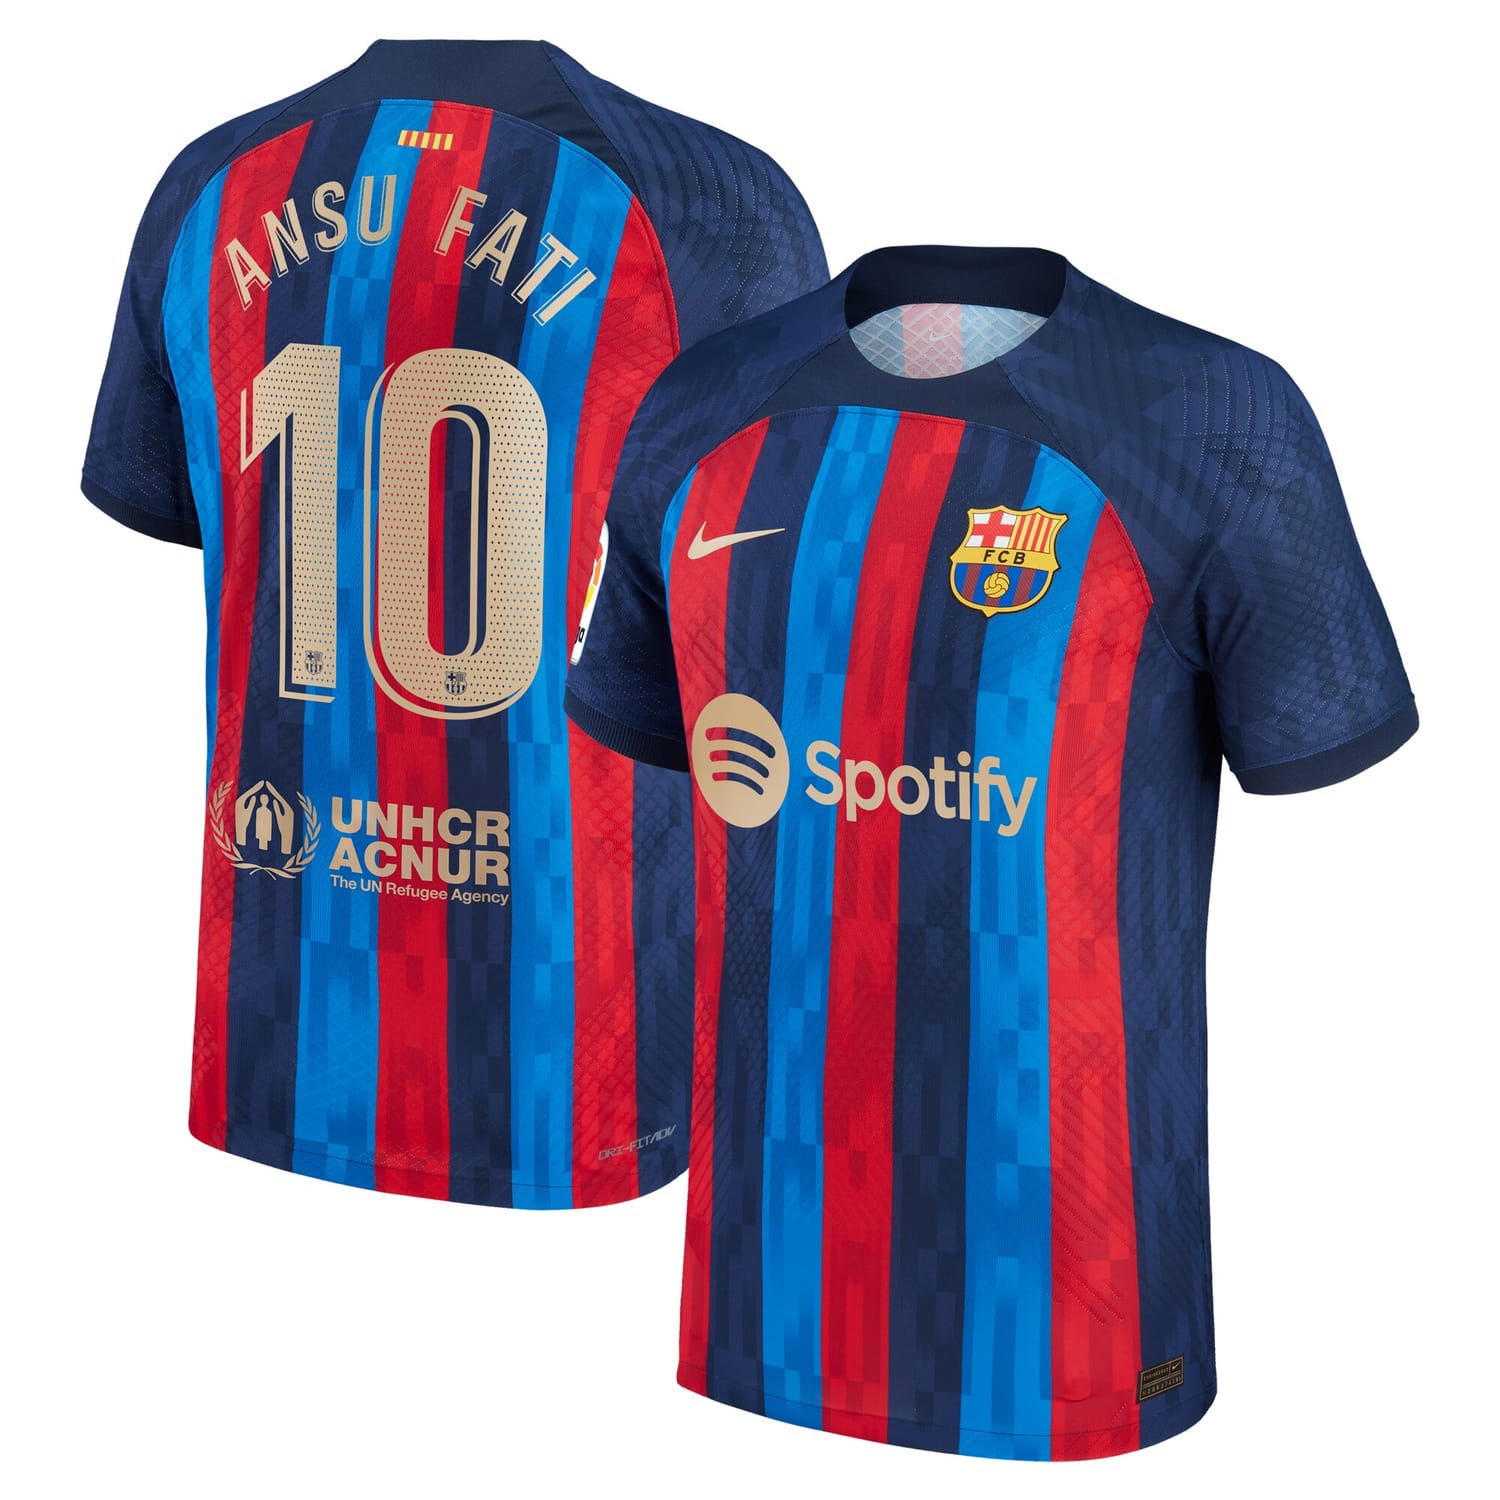 La Liga Barcelona Home Authentic Jersey Shirt Blue 2022-23 player Ansu Fati printing for Men